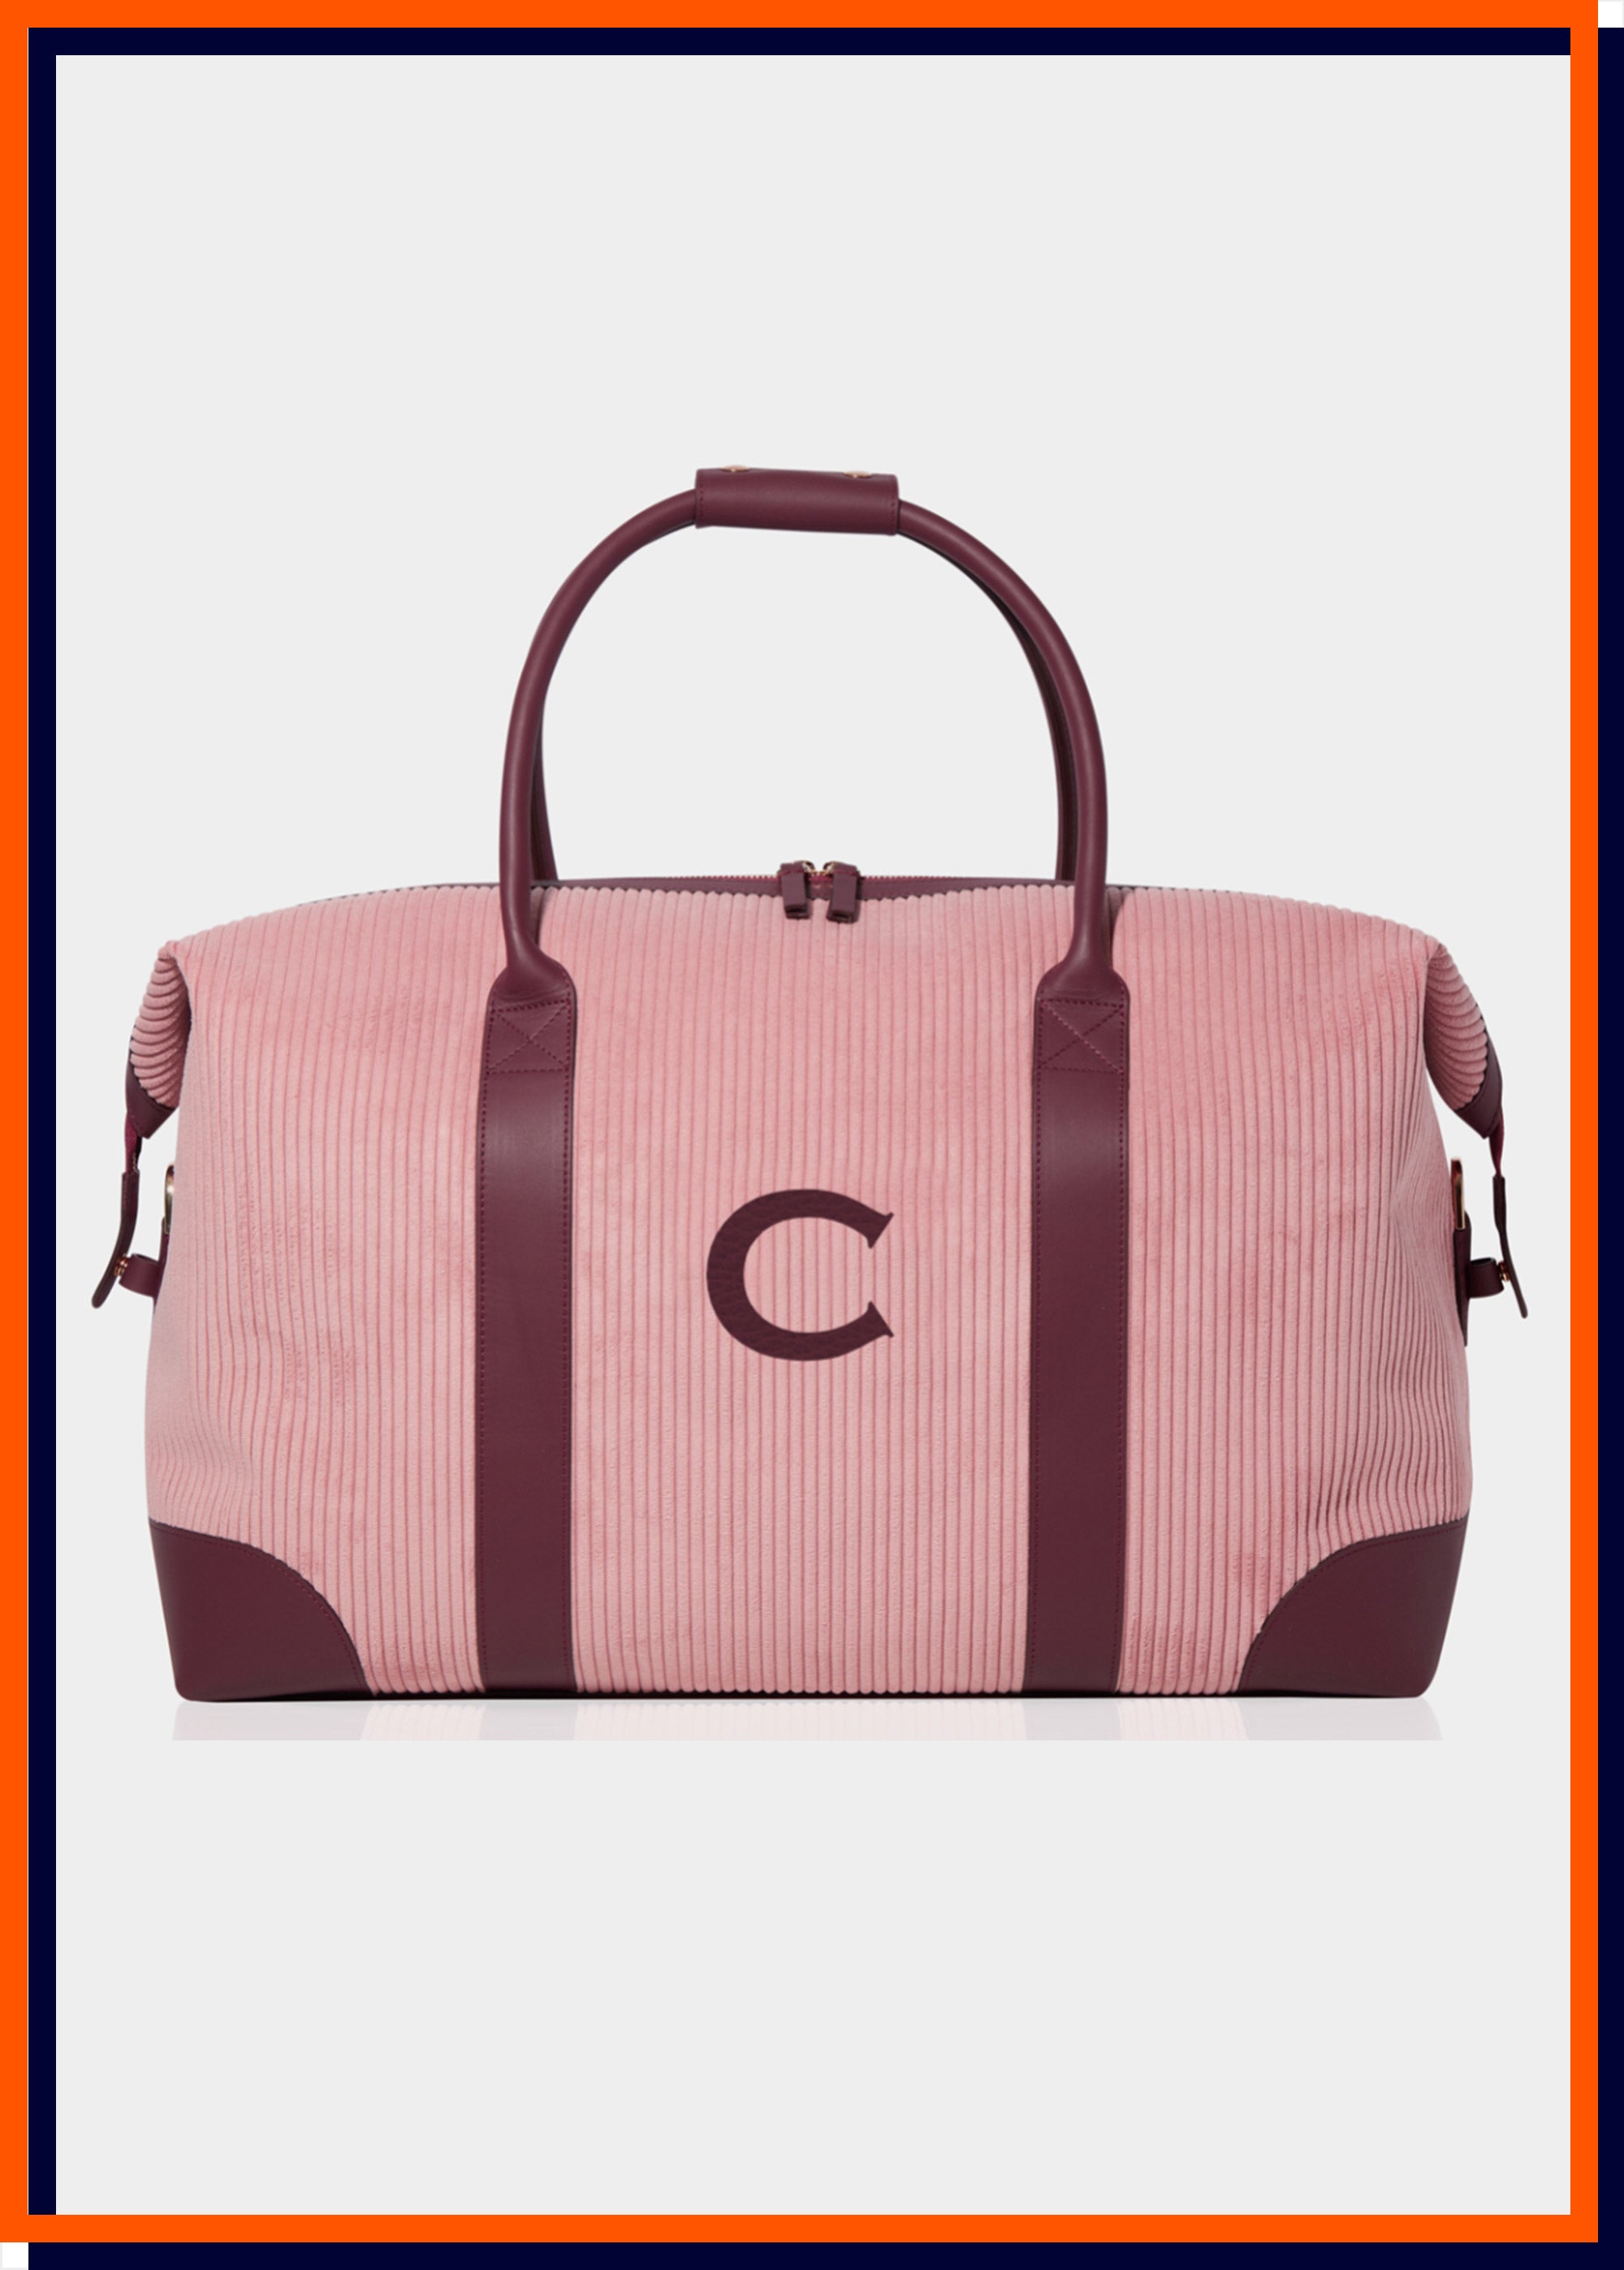 Letter 'C' - Corduroy Weekend Bag, Dusty Pink & Claret